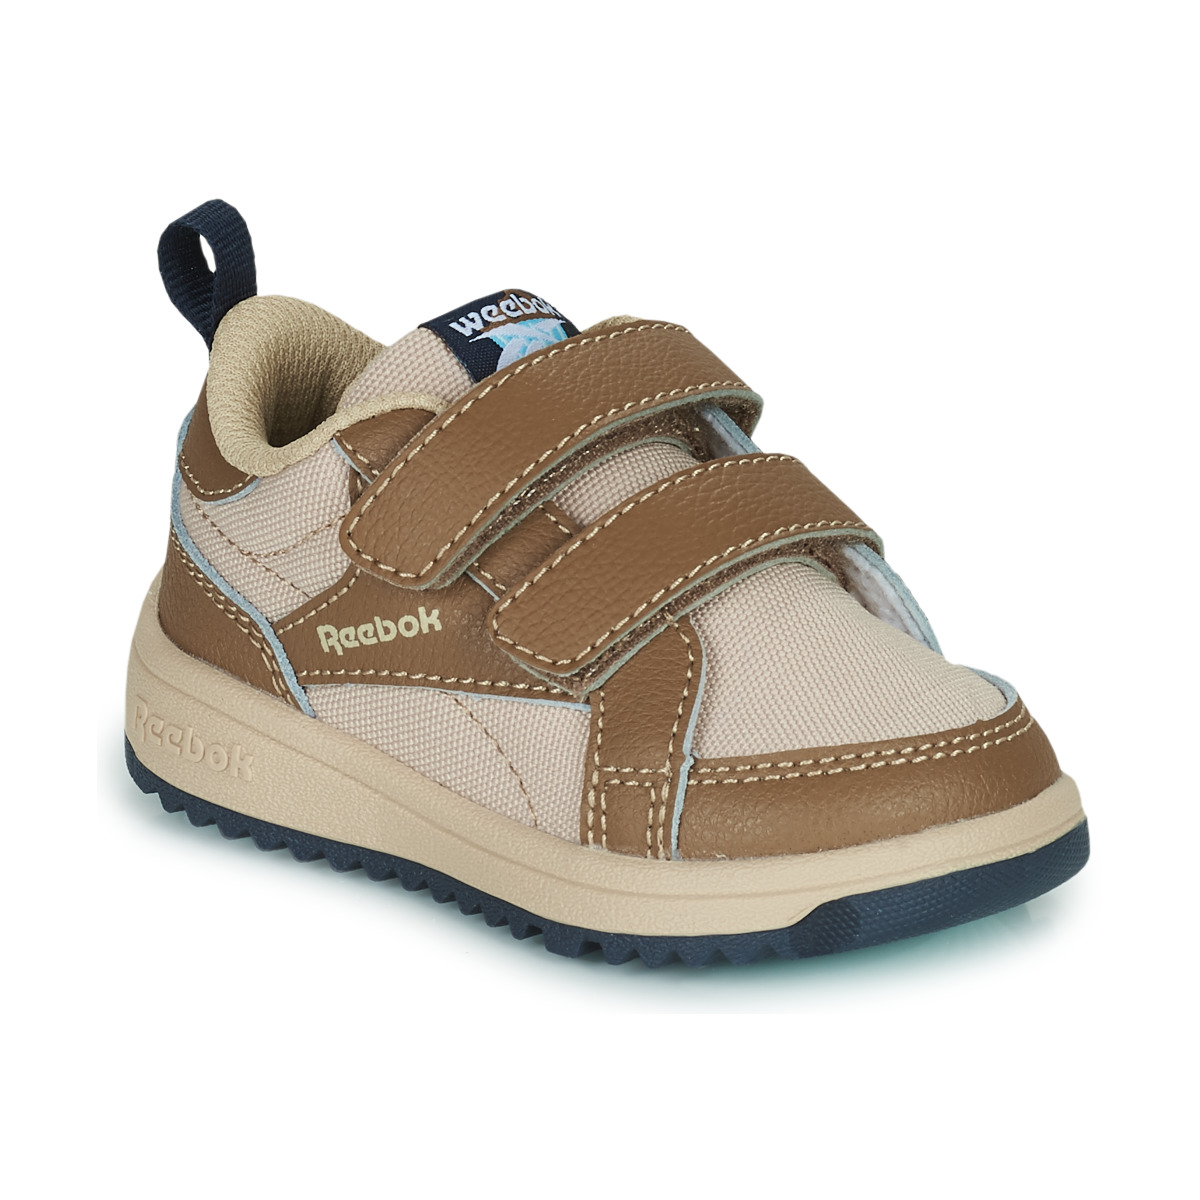 Schuhe Kinder Sneaker Low Reebok Sport WEEBOK CLASP LOW Braun